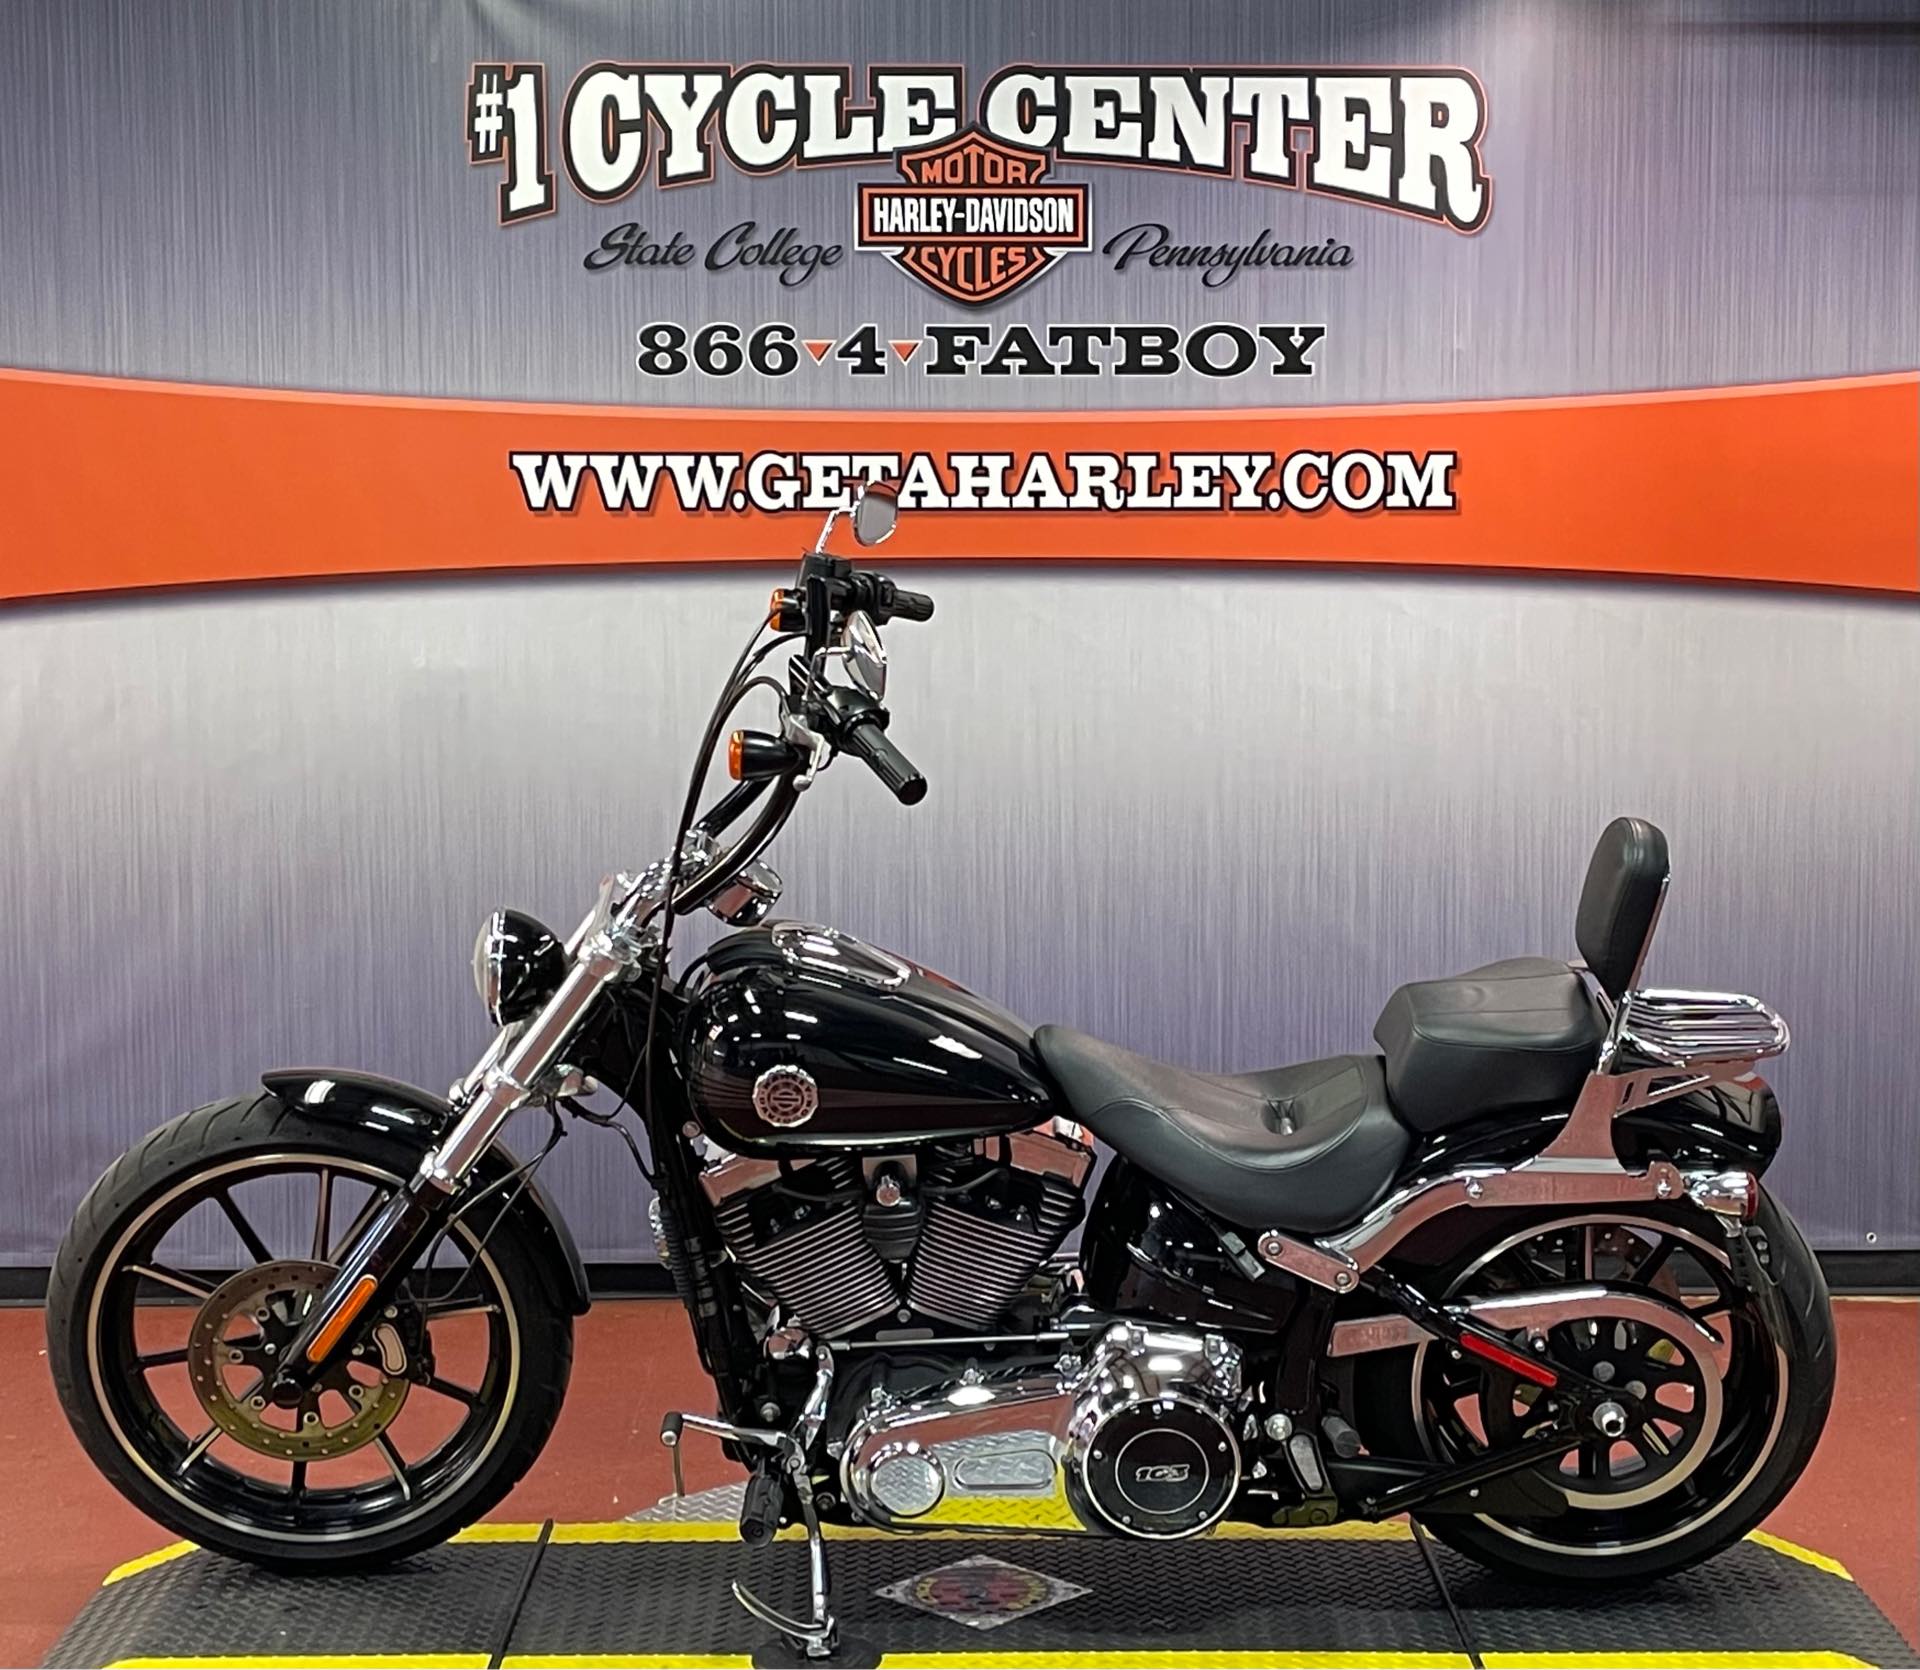 2014 Harley-Davidson Softail Breakout at #1 Cycle Center Harley-Davidson